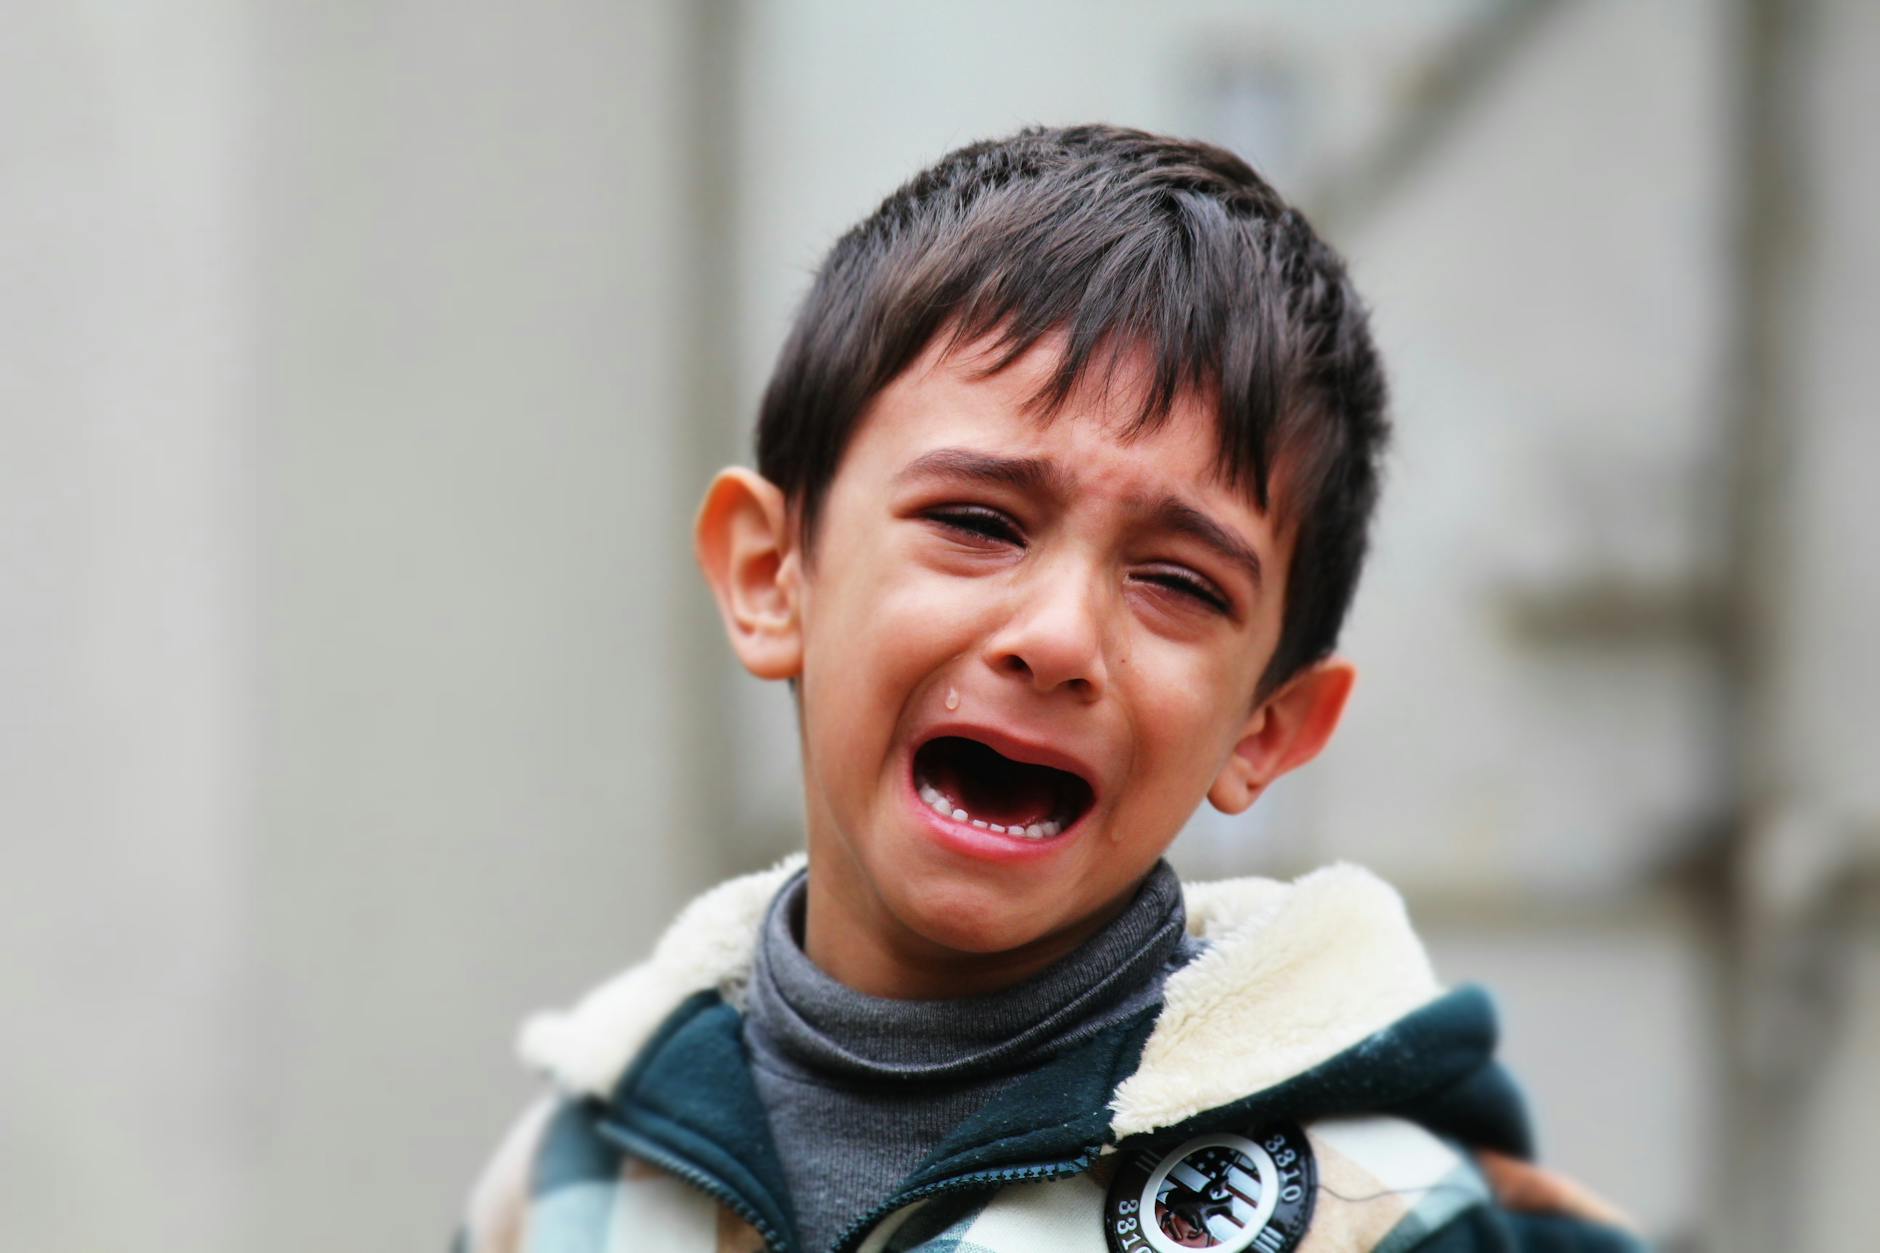 A boy crying.^[[Image](https://www.pexels.com/photo/boy-child-crying-iraq-39815/) on [Pexels](https://www.pexels.com/)]